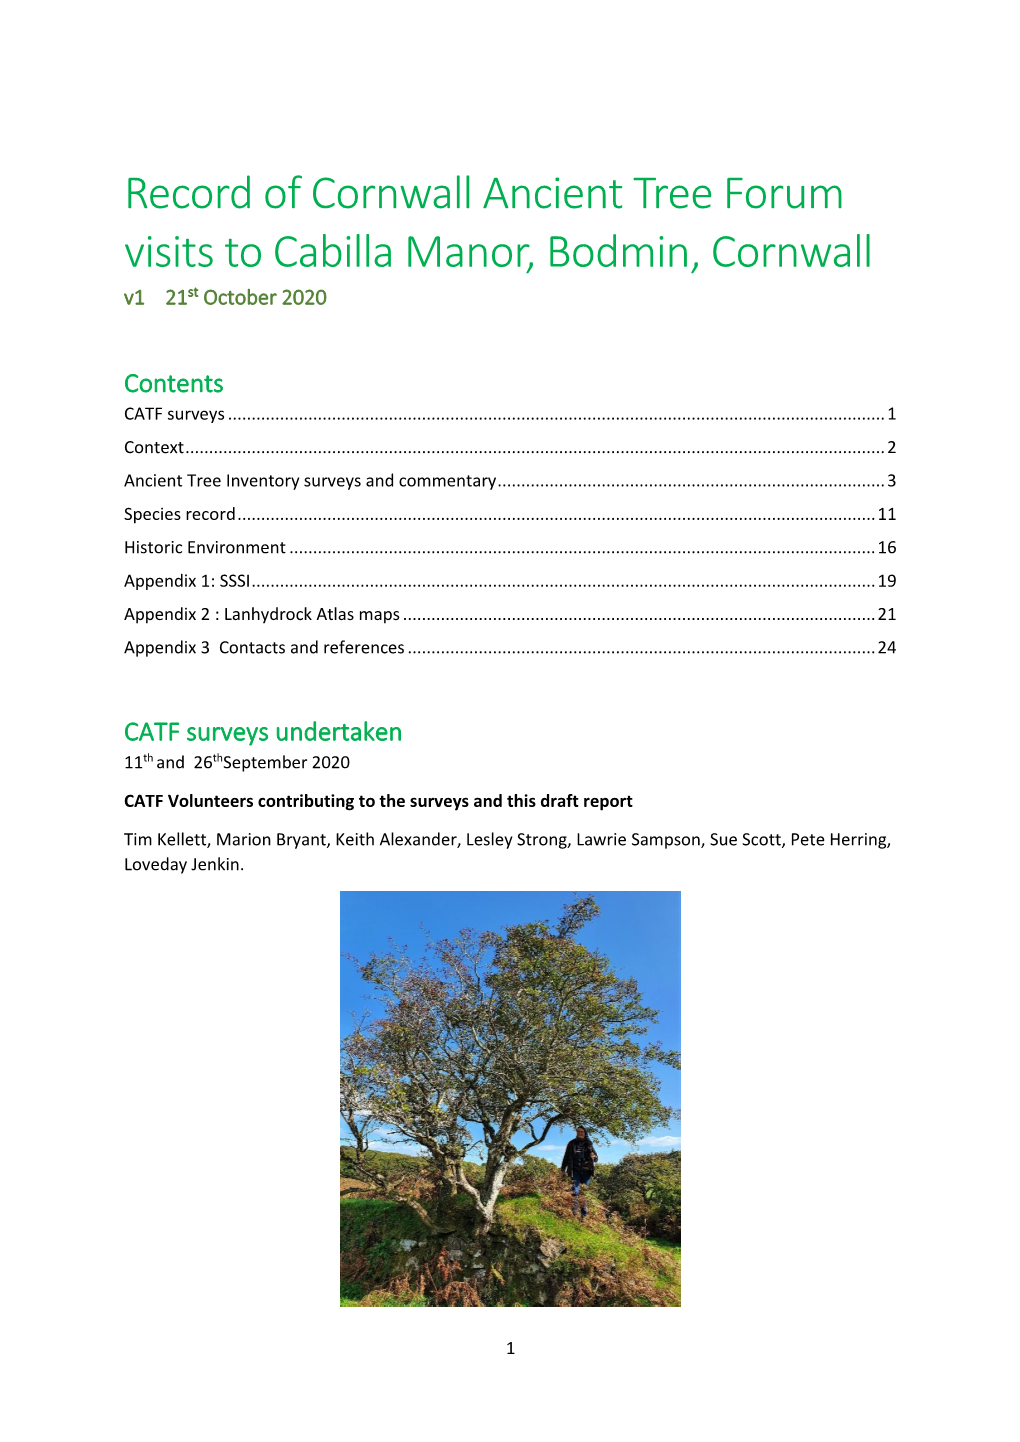 Cornwall Ancient Tree Forum Visits to Cabilla Manor 2020